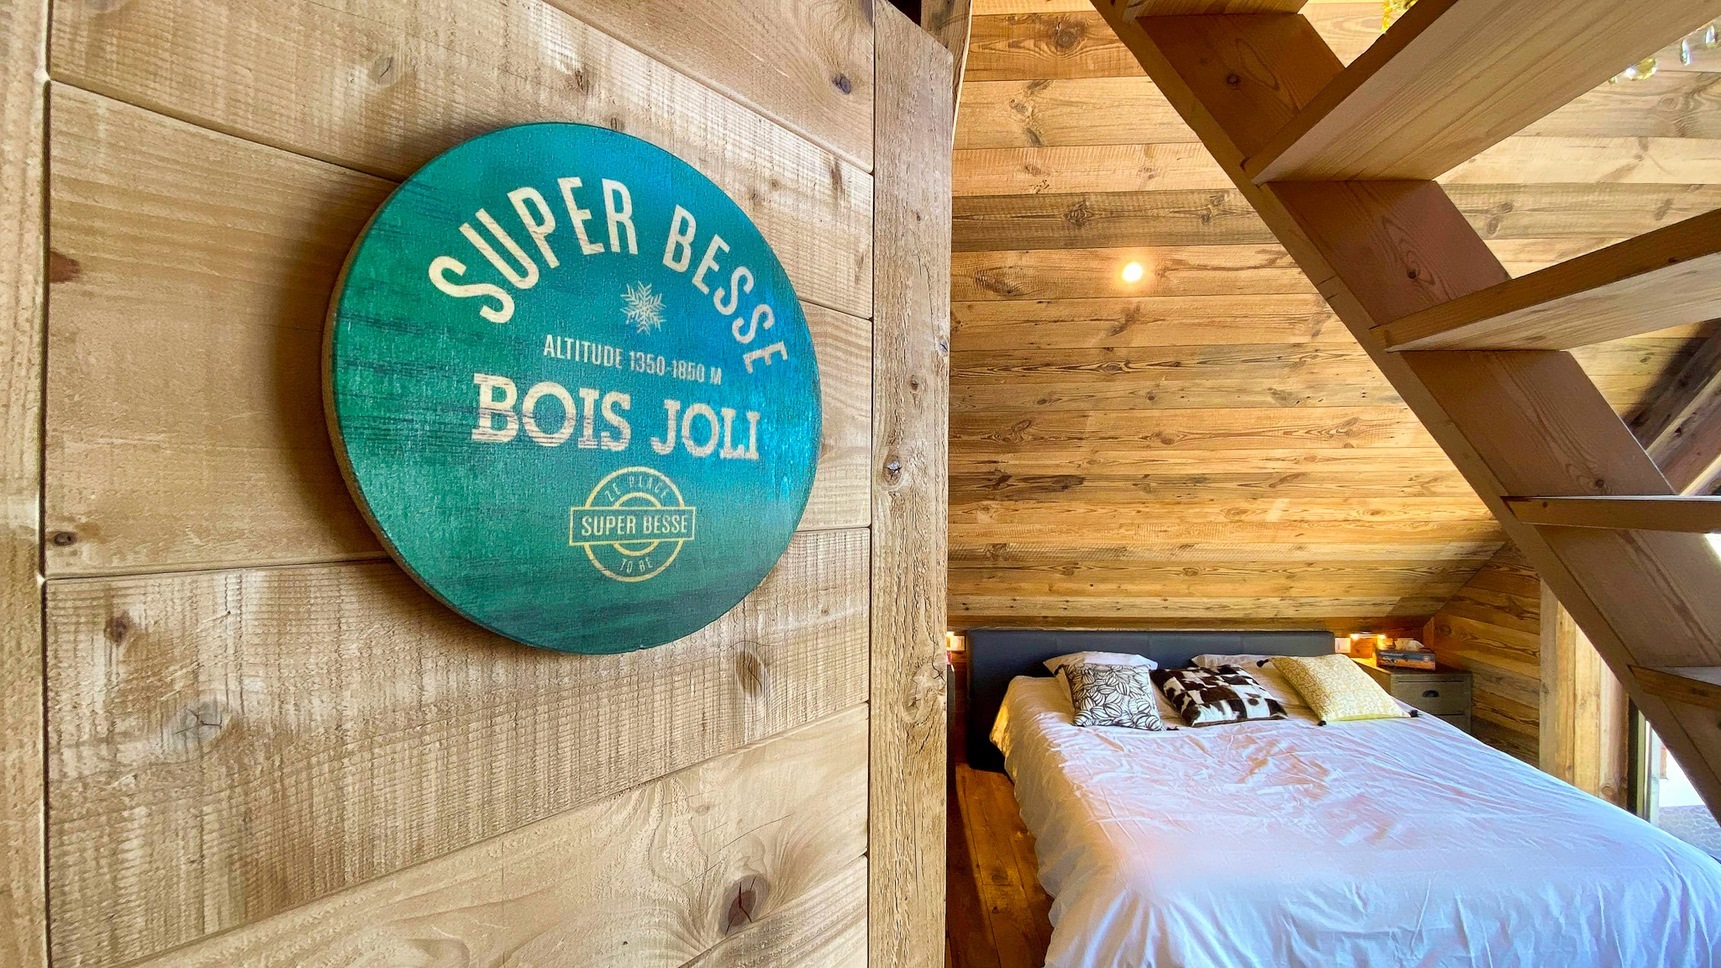 Chalet Super Besse for ten people, the Bois Joli room